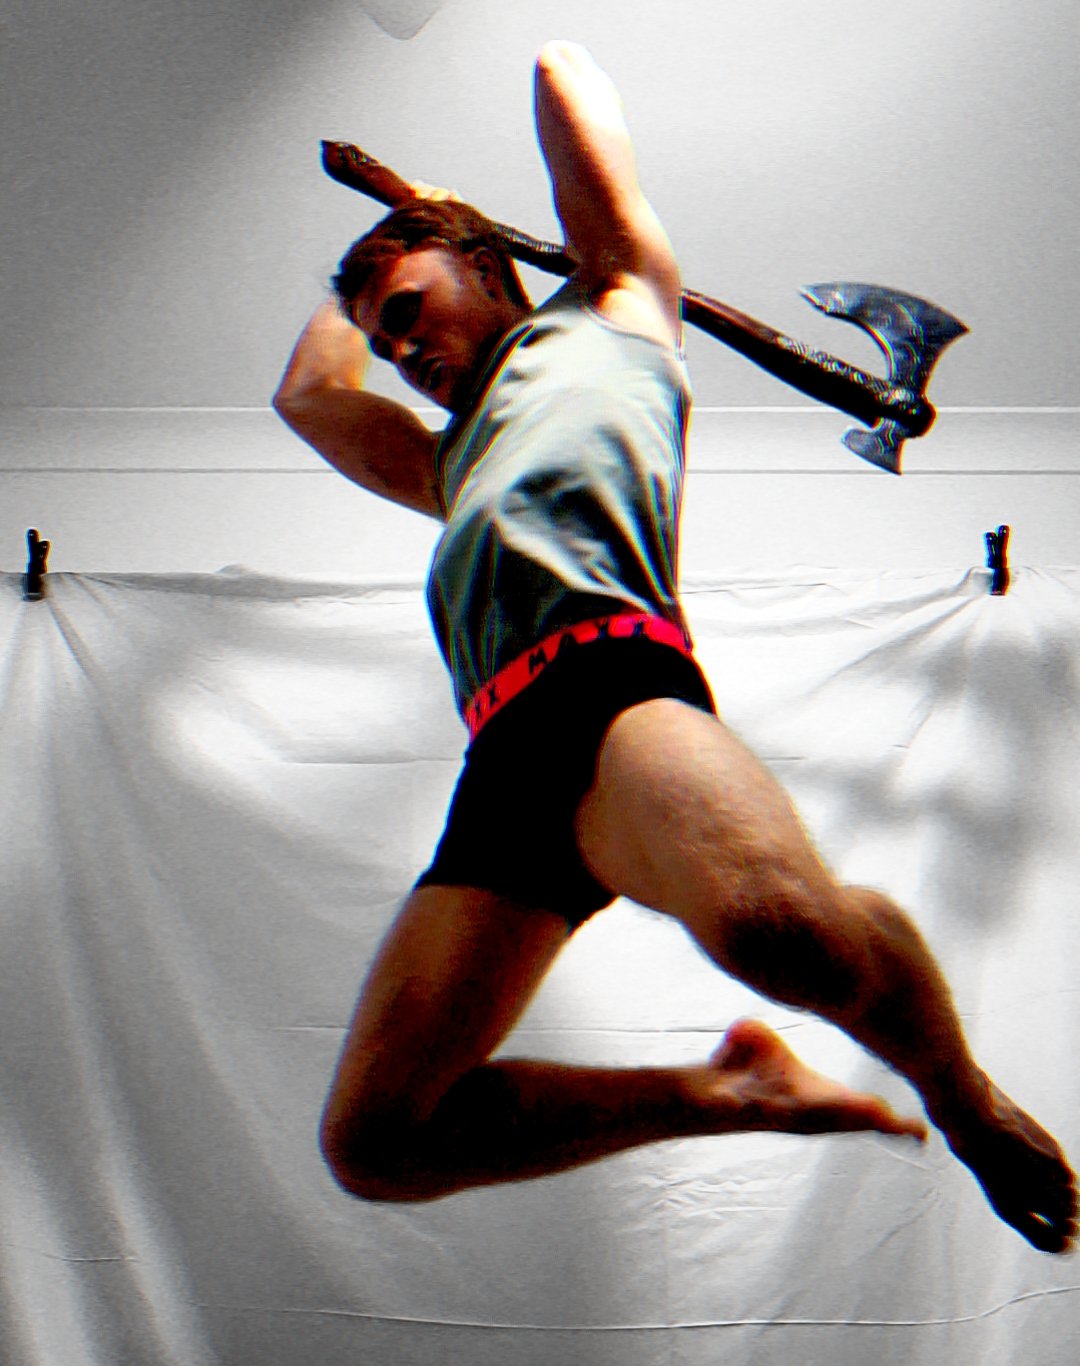 Comic Poses - Males jumping pose | PoseMy.Art